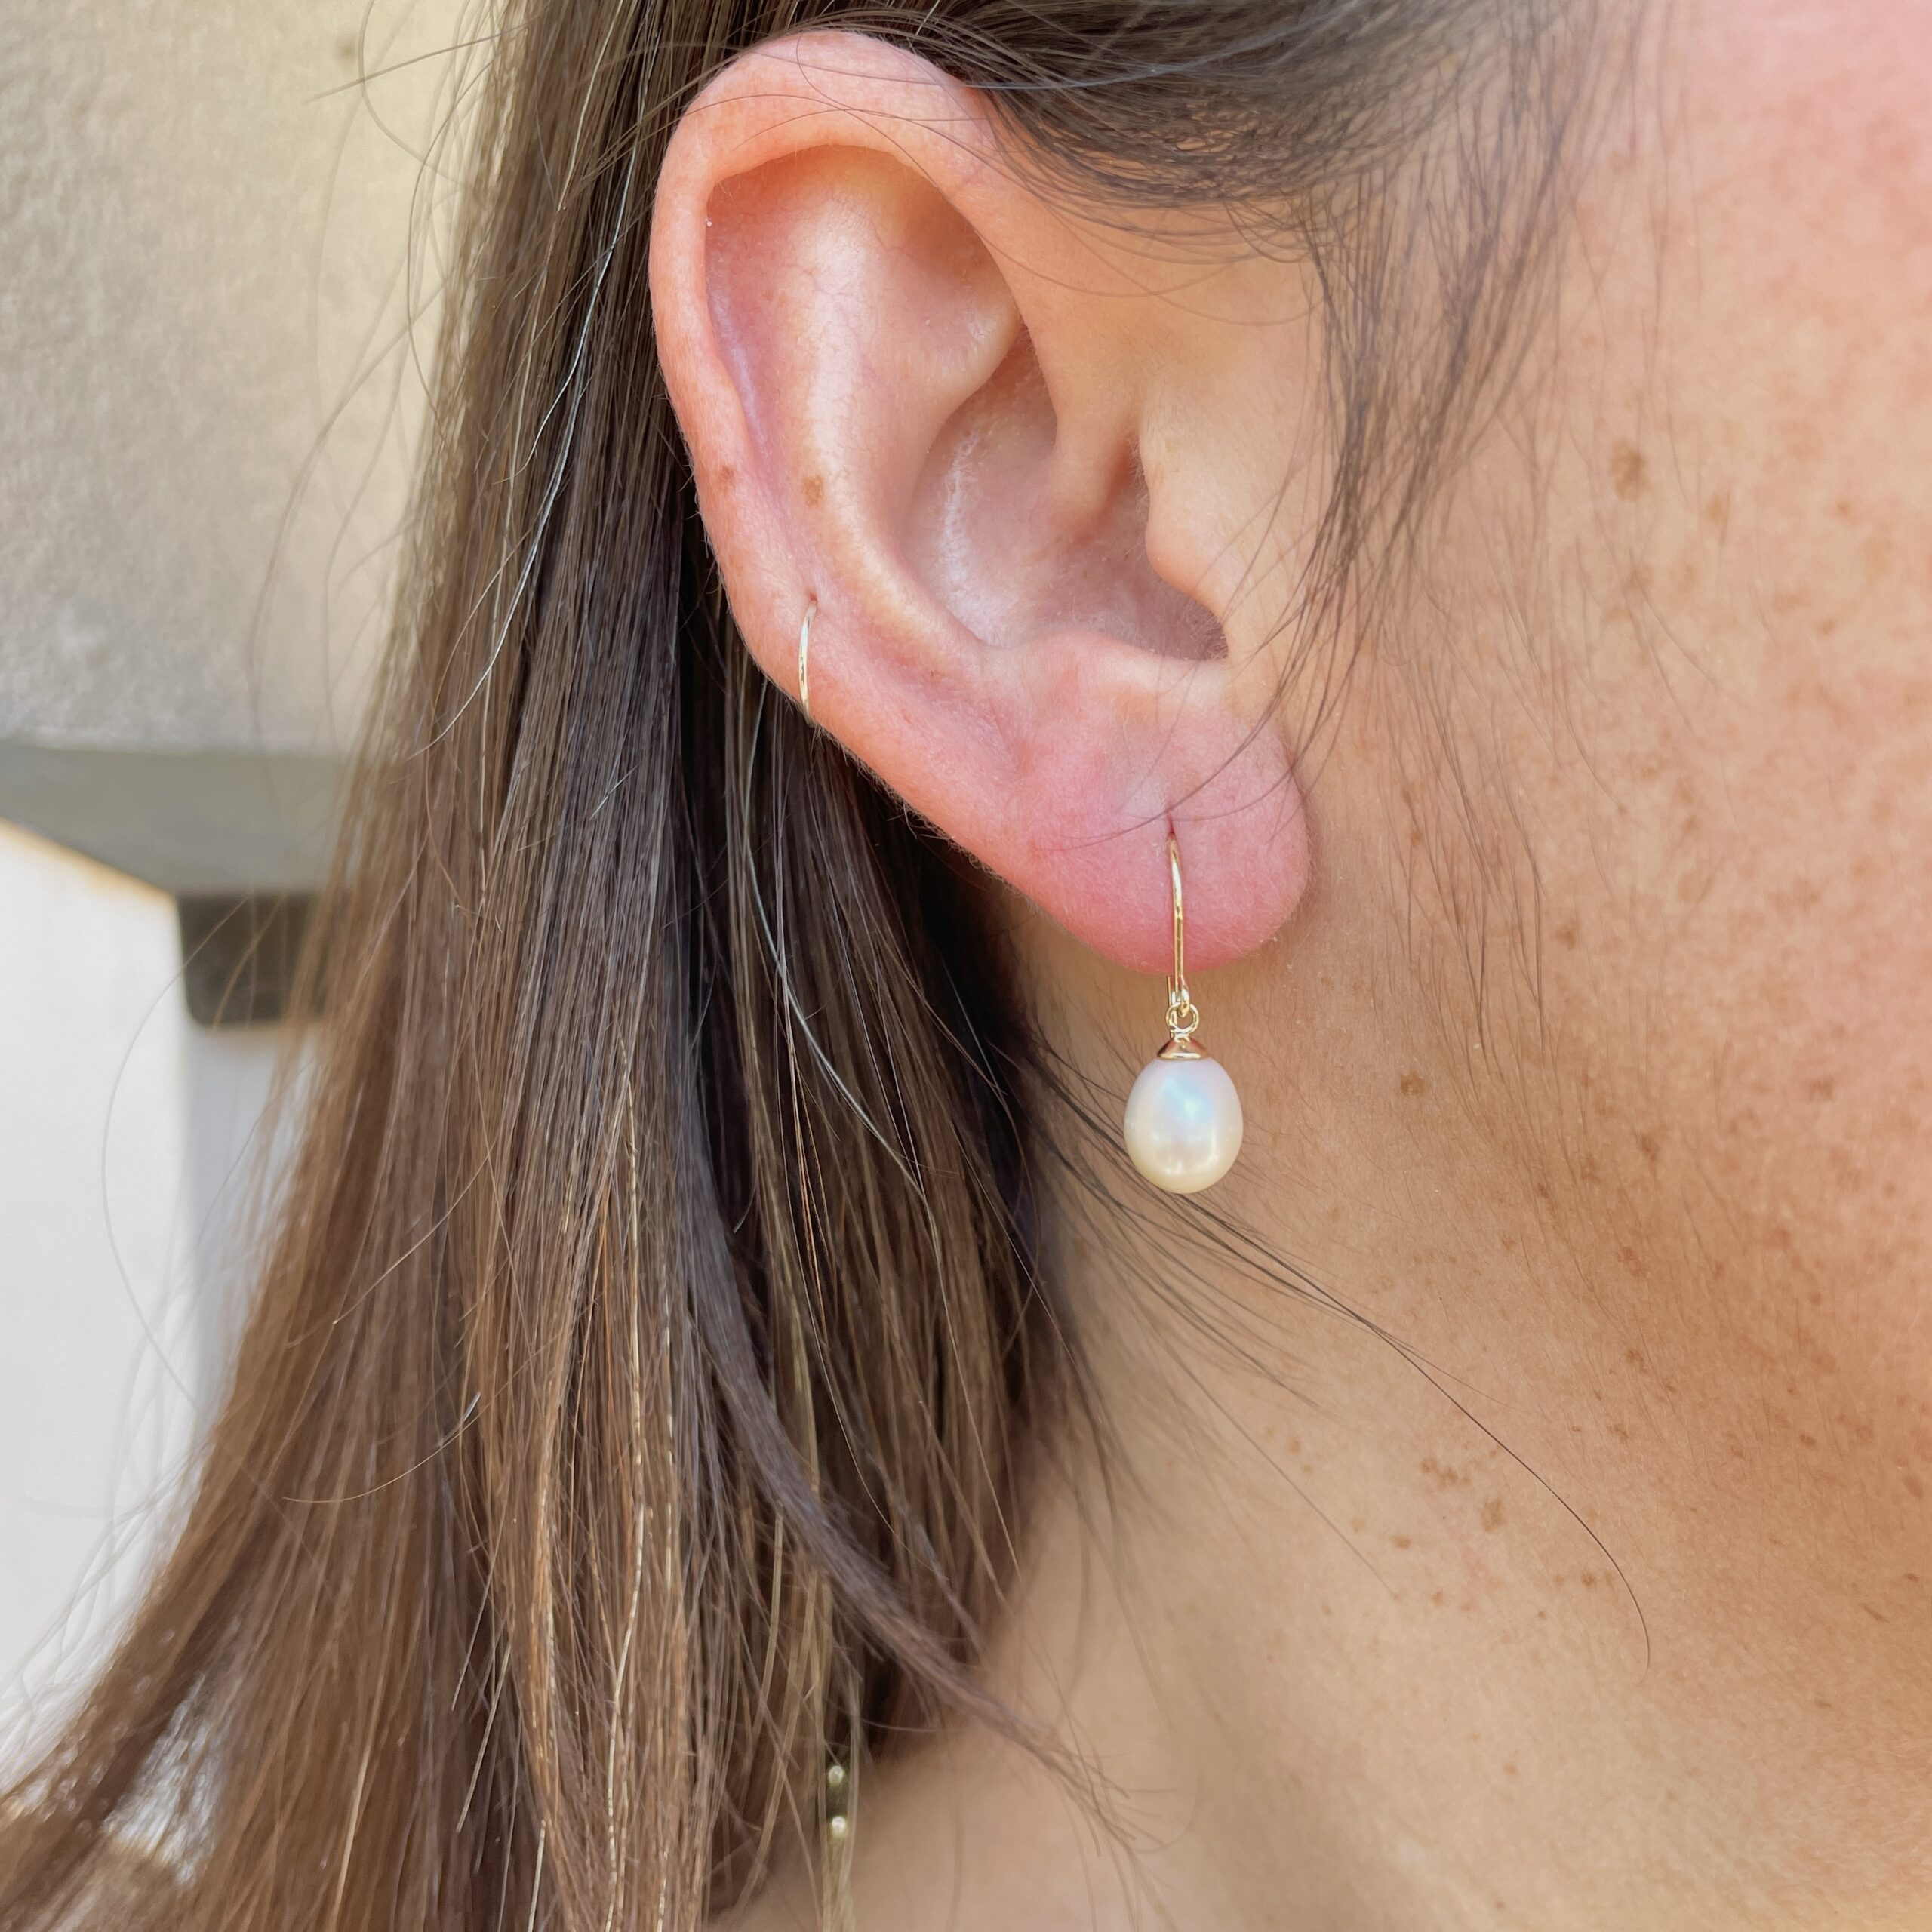 Yellow Gold Freshwater Pearl Drop Earrings